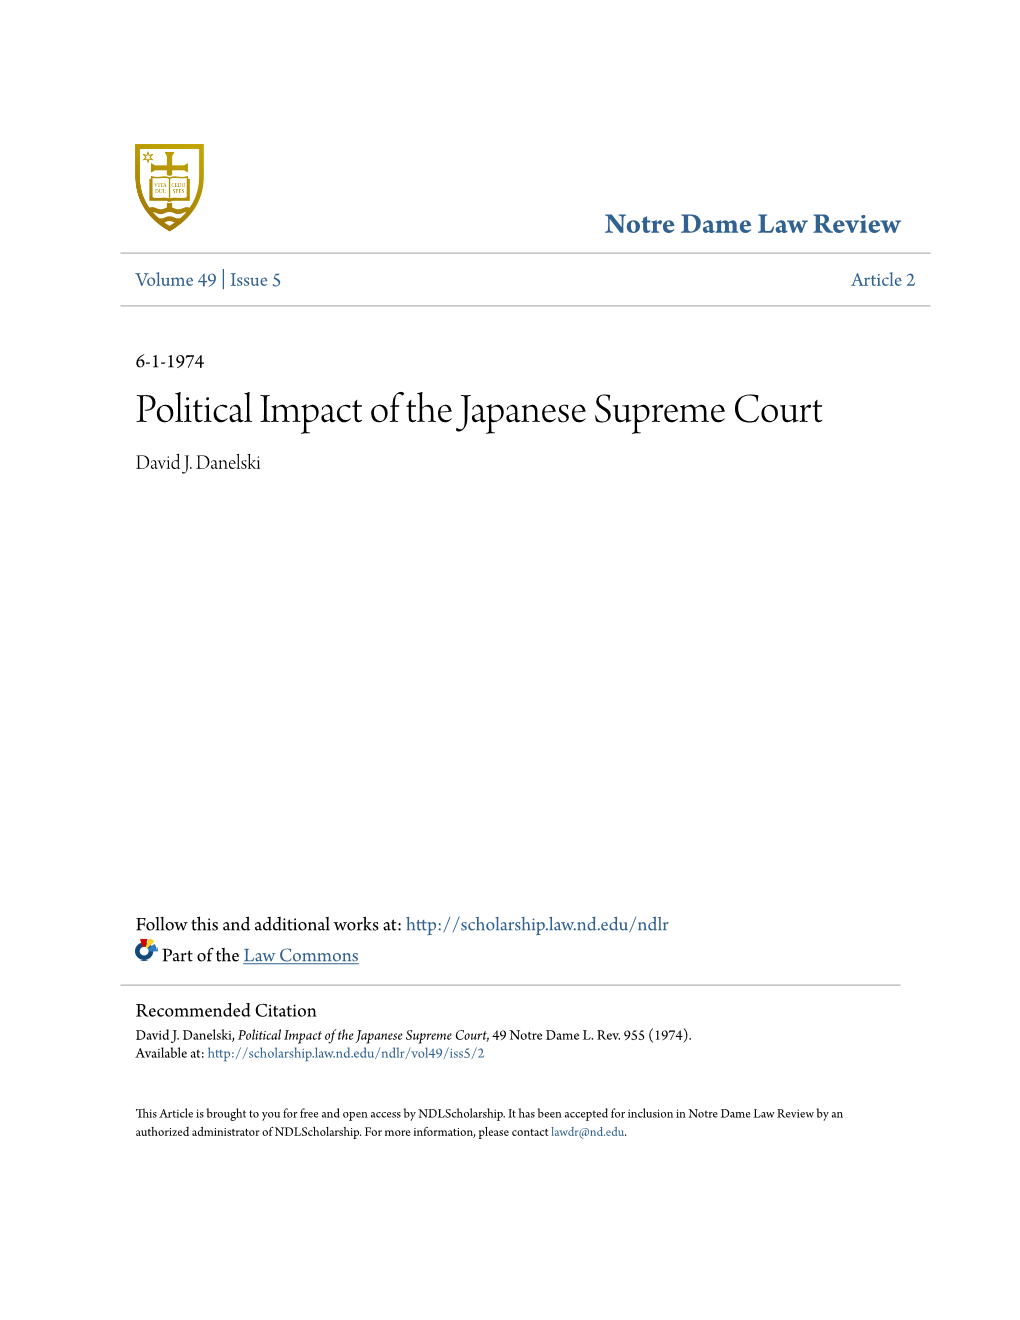 Political Impact of the Japanese Supreme Court David J